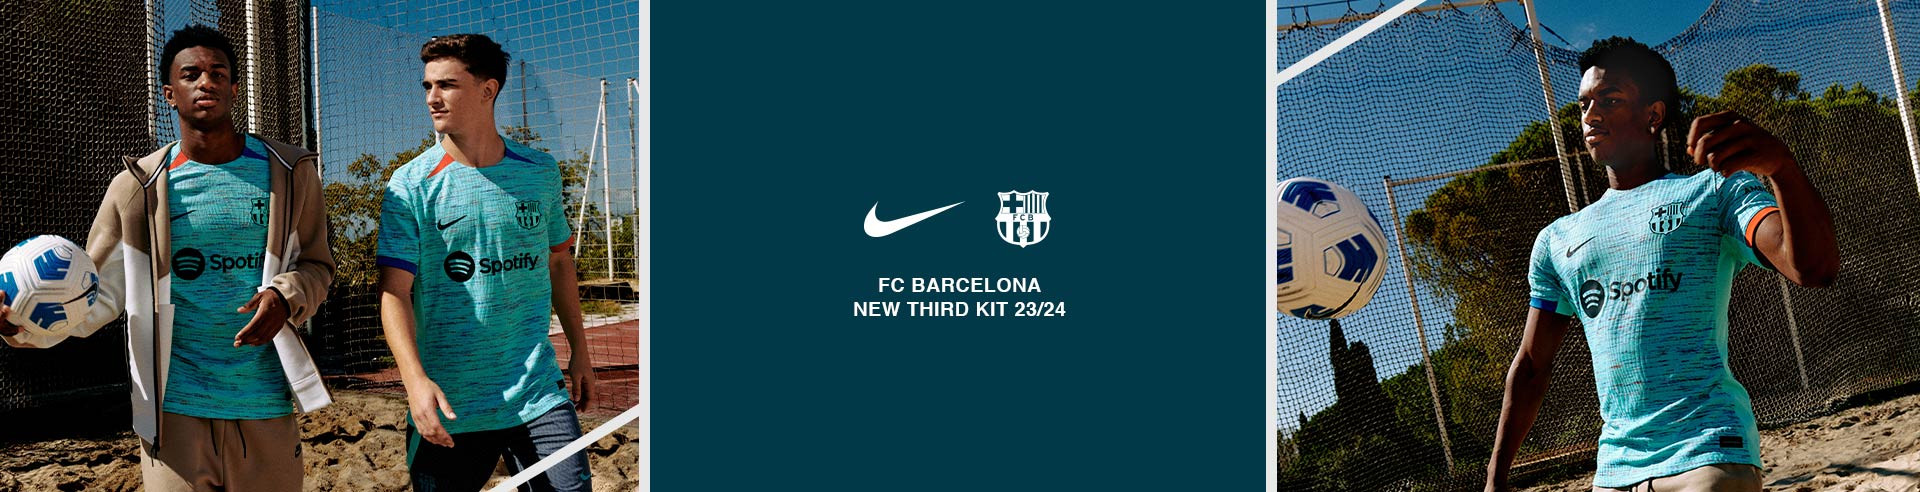 Nike FC Barcelona New Third Kit 23/24 ALL